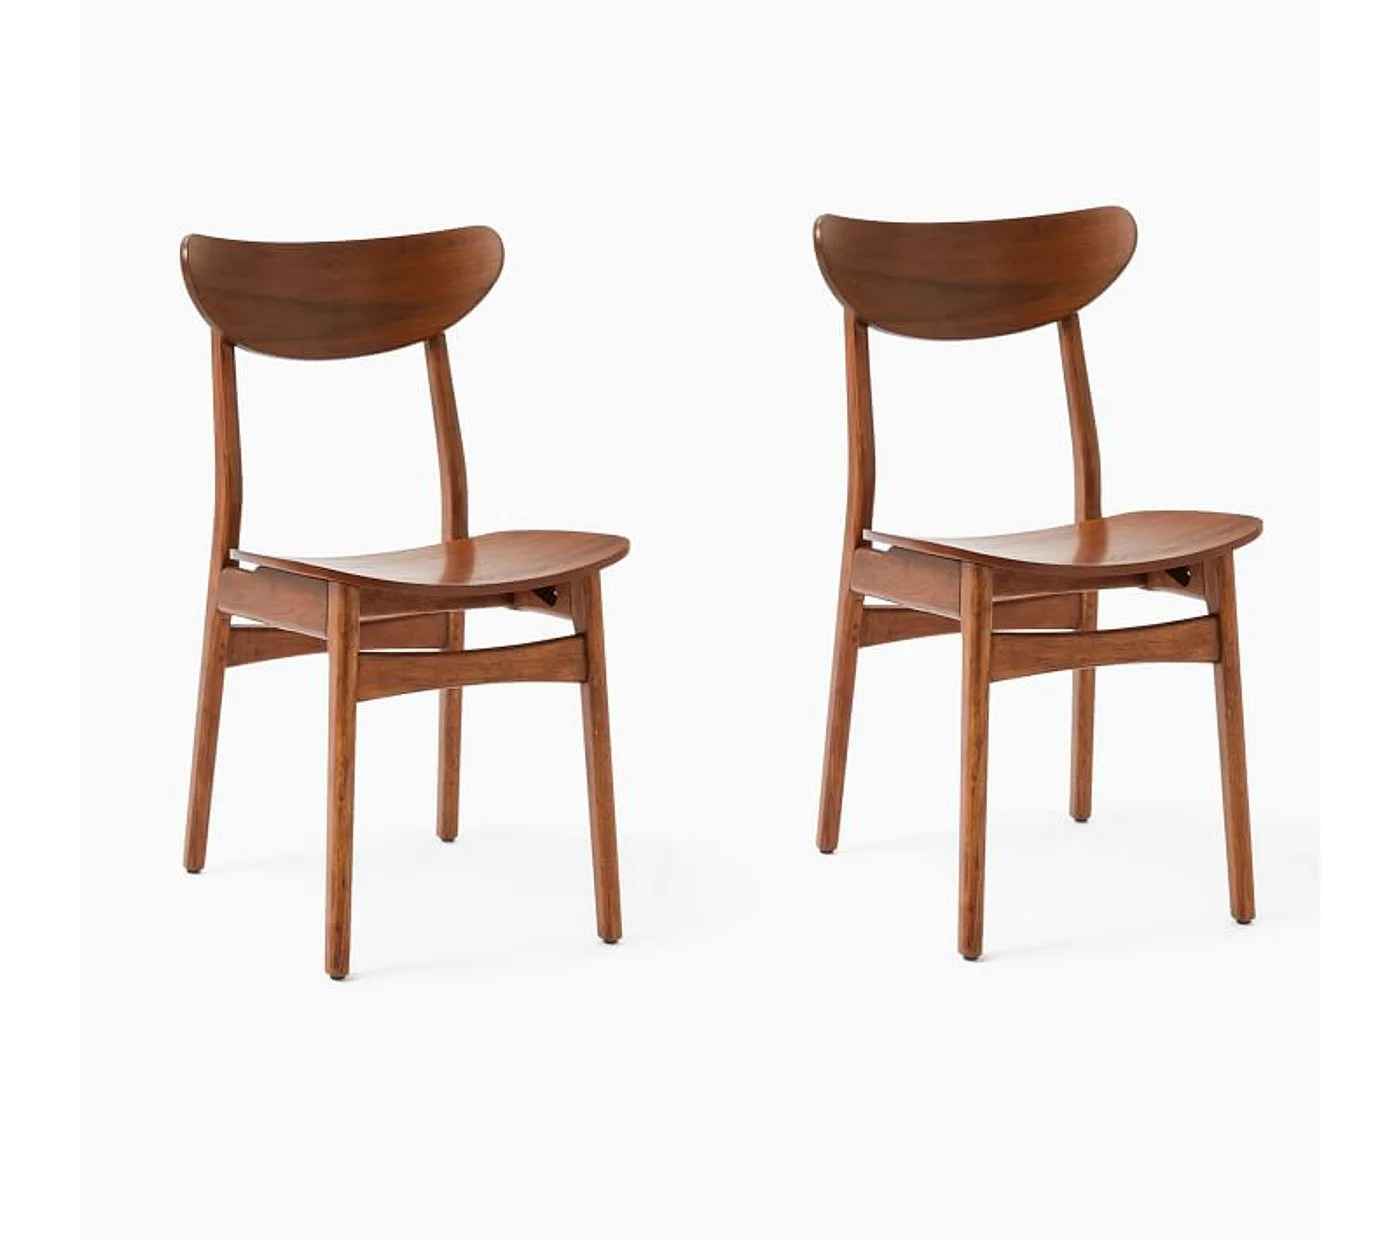 Lassic Café Wood Dining Chair, Walnut